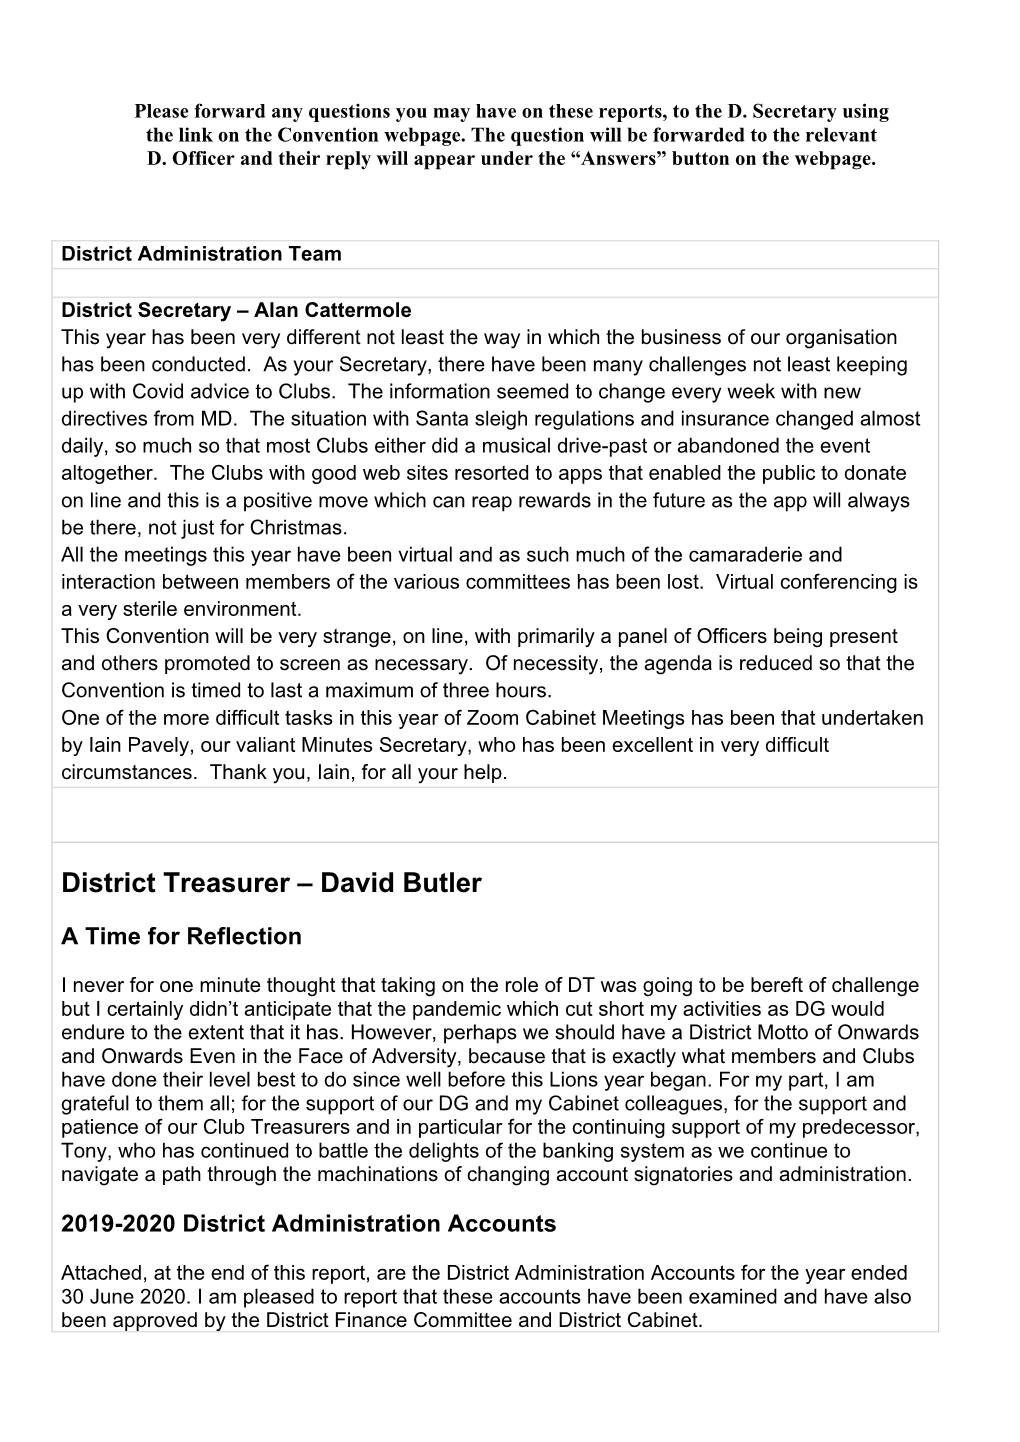 District Treasurer – David Butler